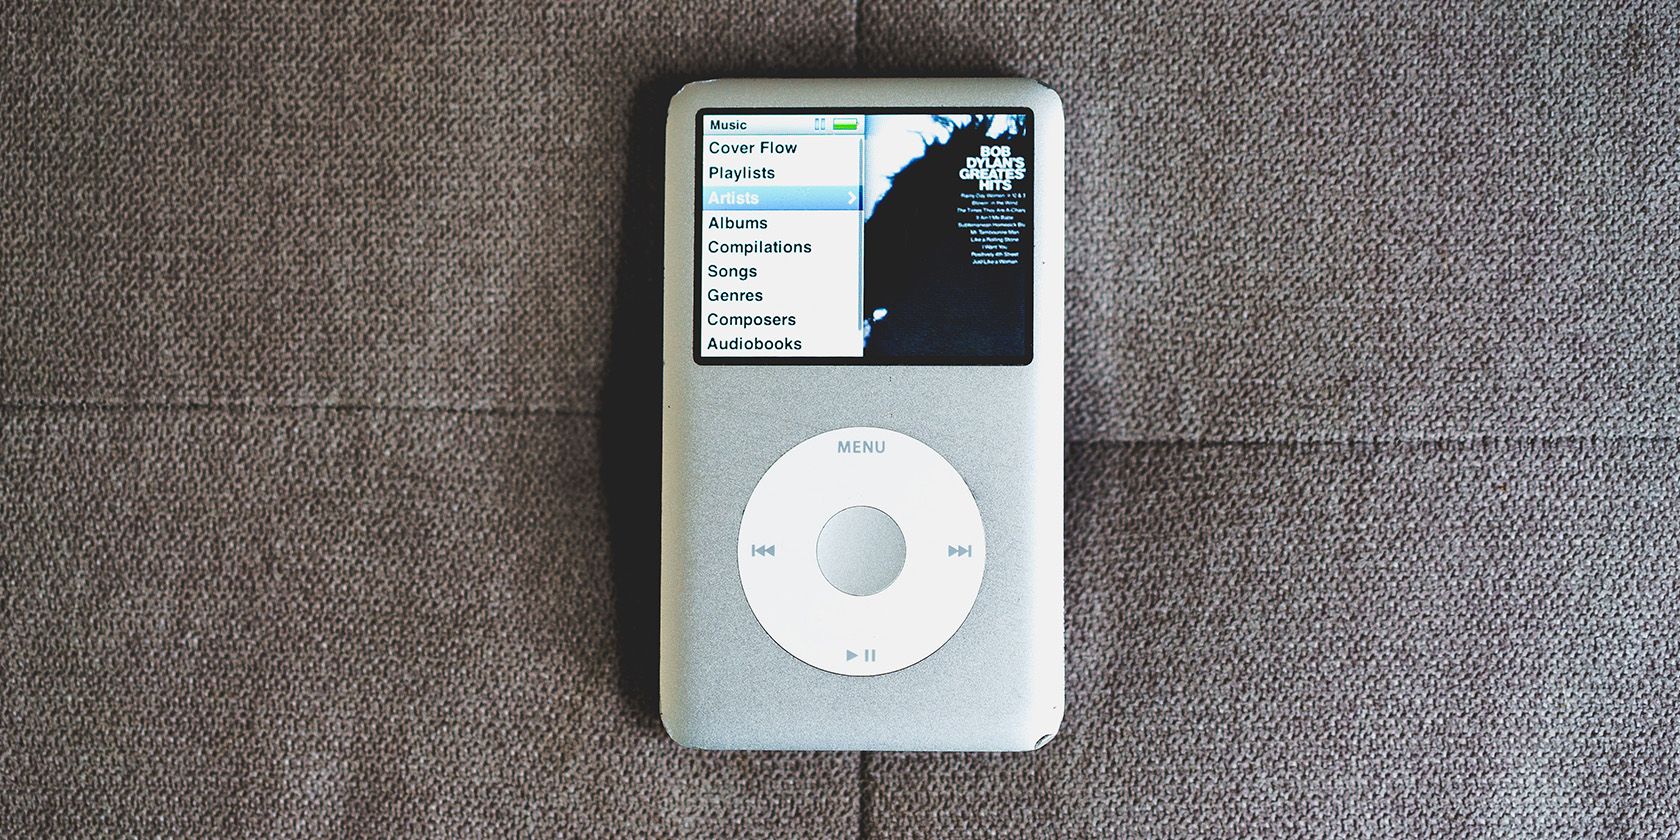 iPod on fabric